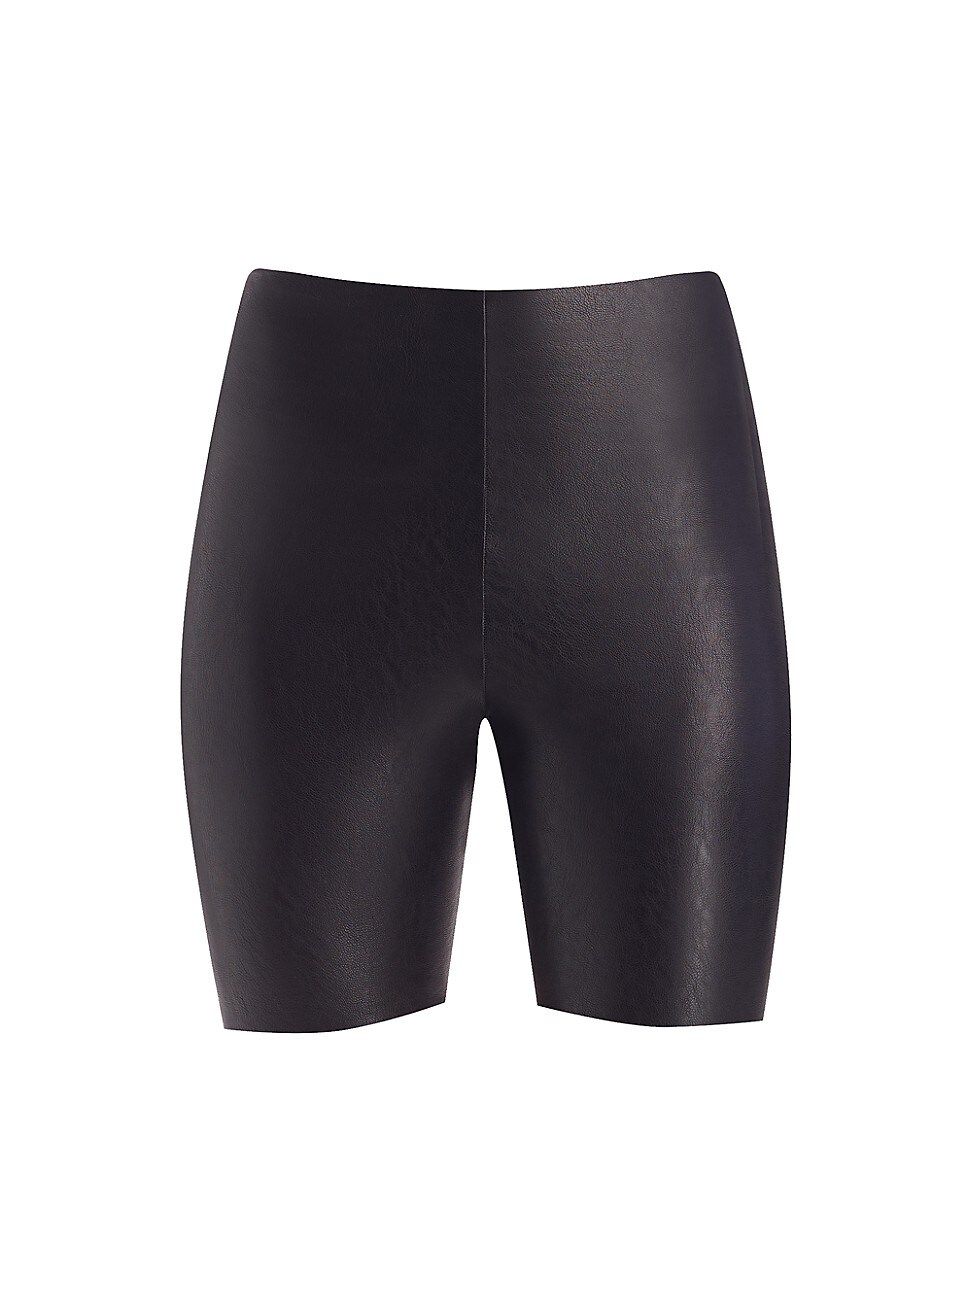 Commando Women's Faux Leather Biker Shorts - Black - Size Small | Saks Fifth Avenue